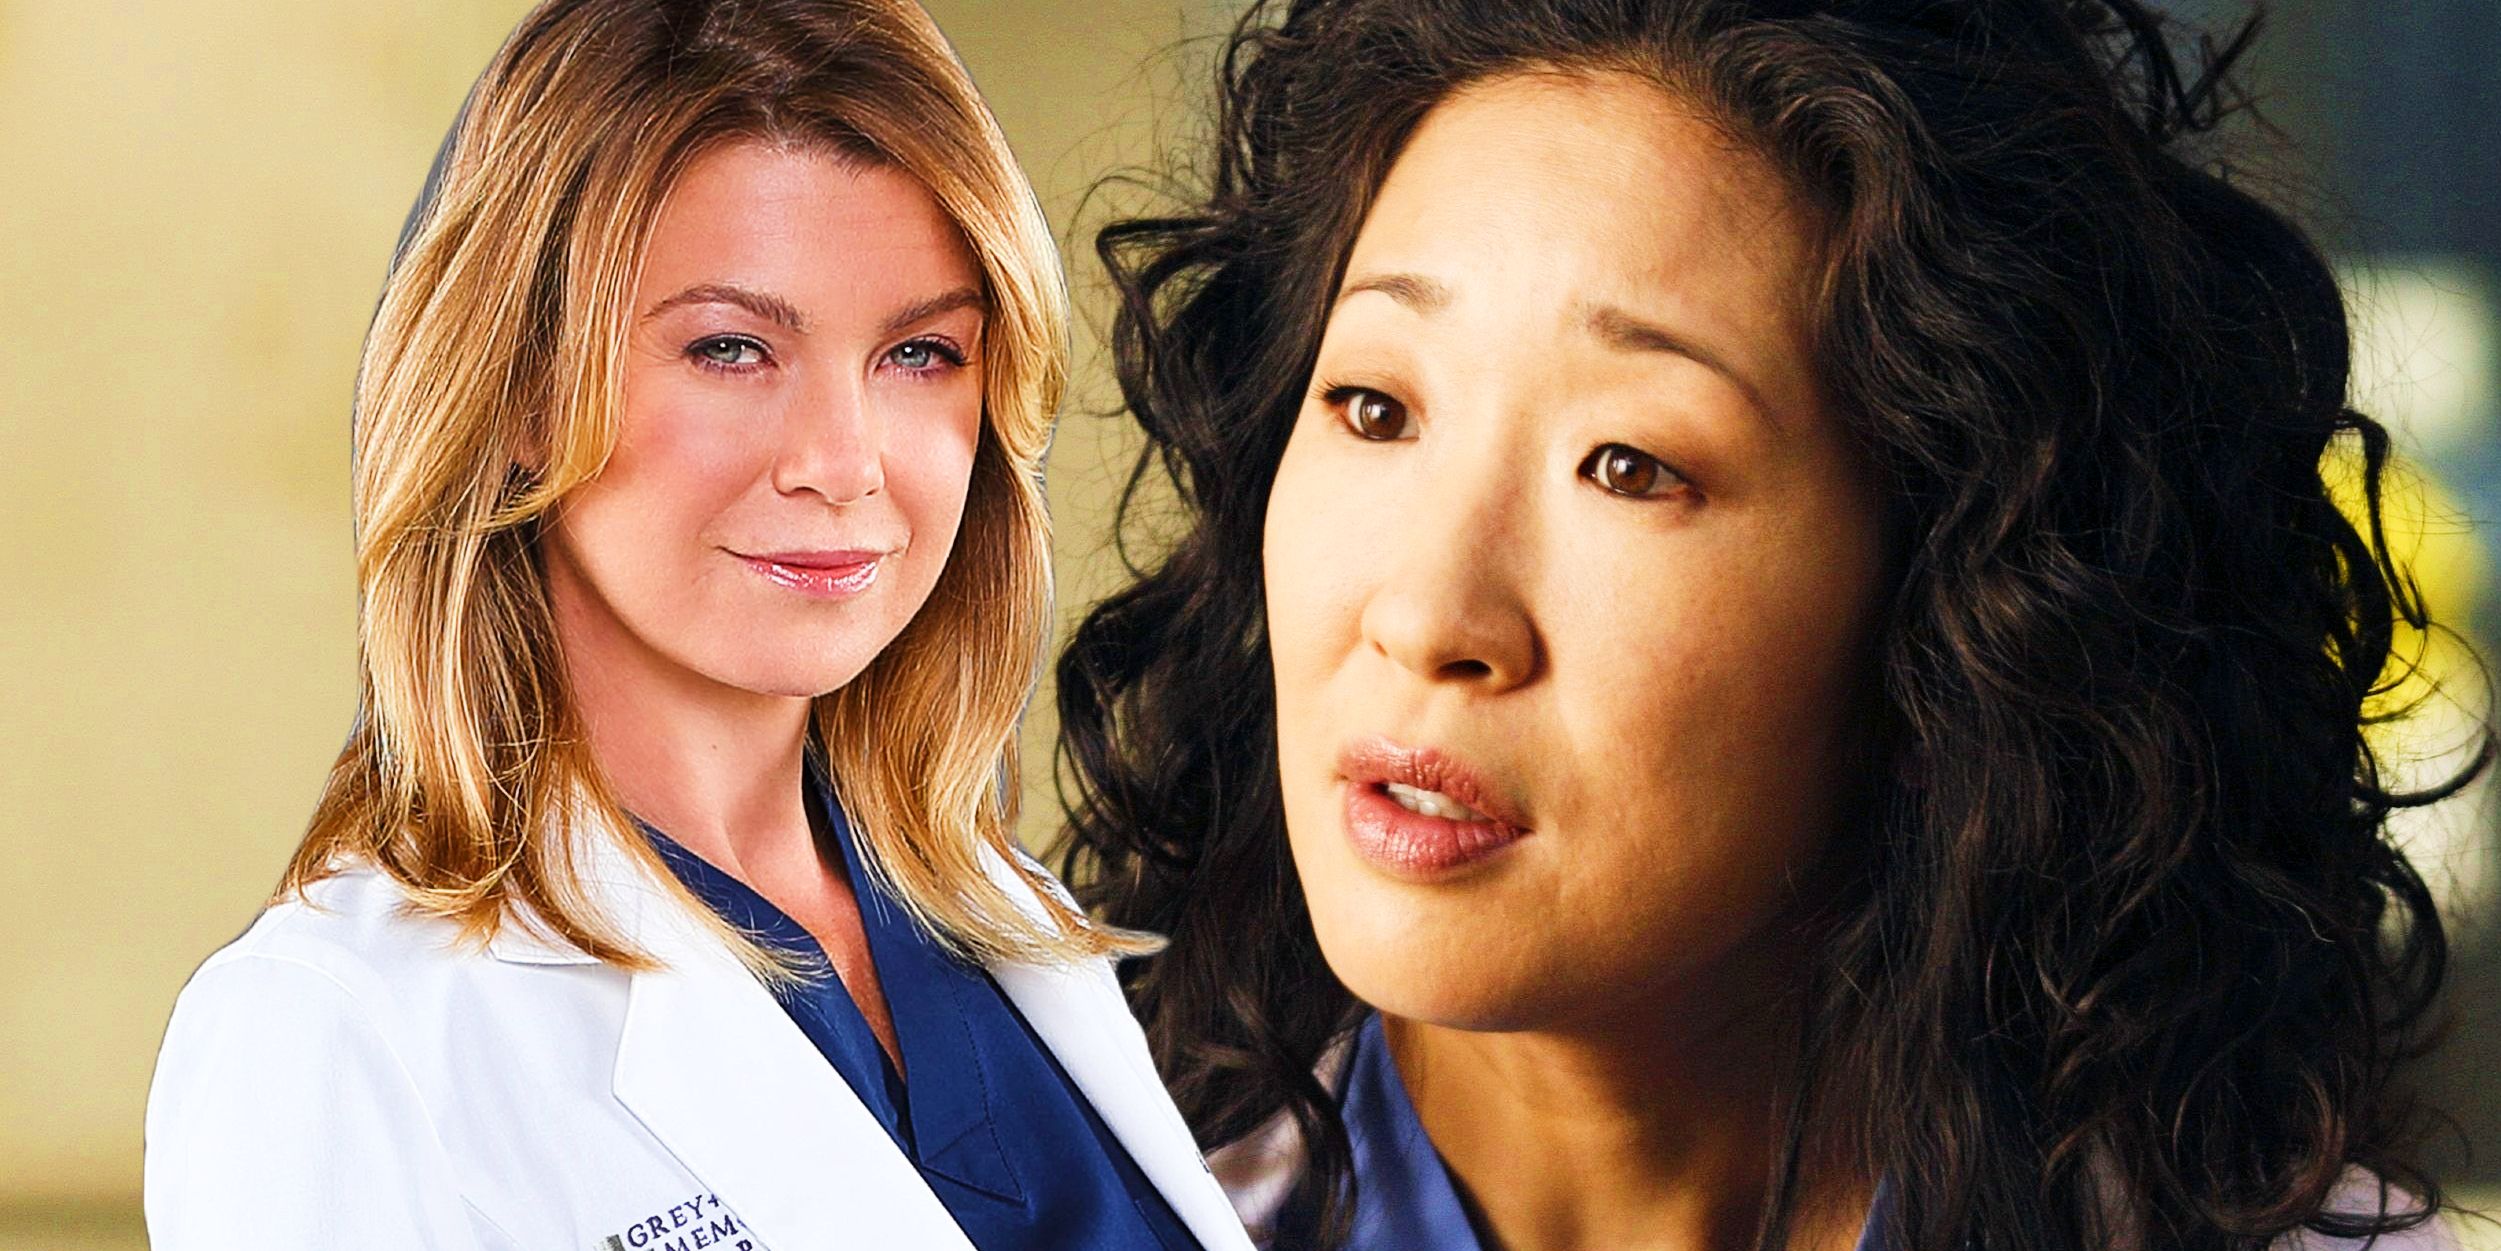 Cristina Yang (Sandra Oh) looking worried next Meredith Grey (Ellen Pompeo) wearing lab coat with slight smile in Grey's Anatomy